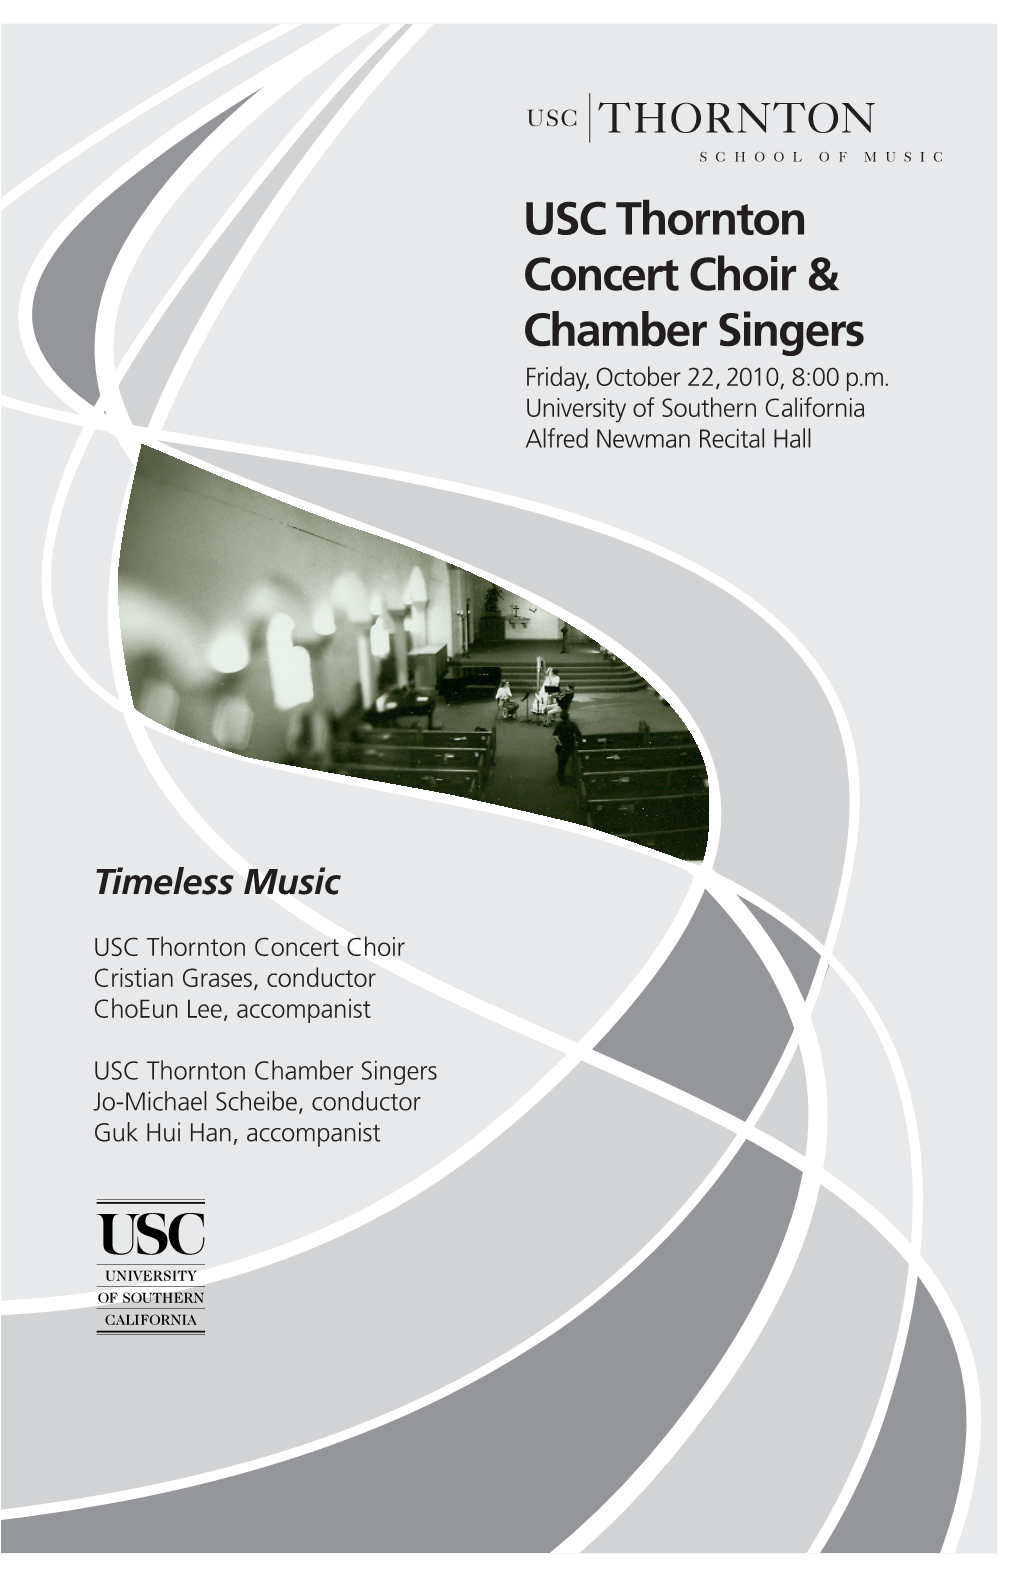 USC Thornton Concert Choir & Chamber Singers